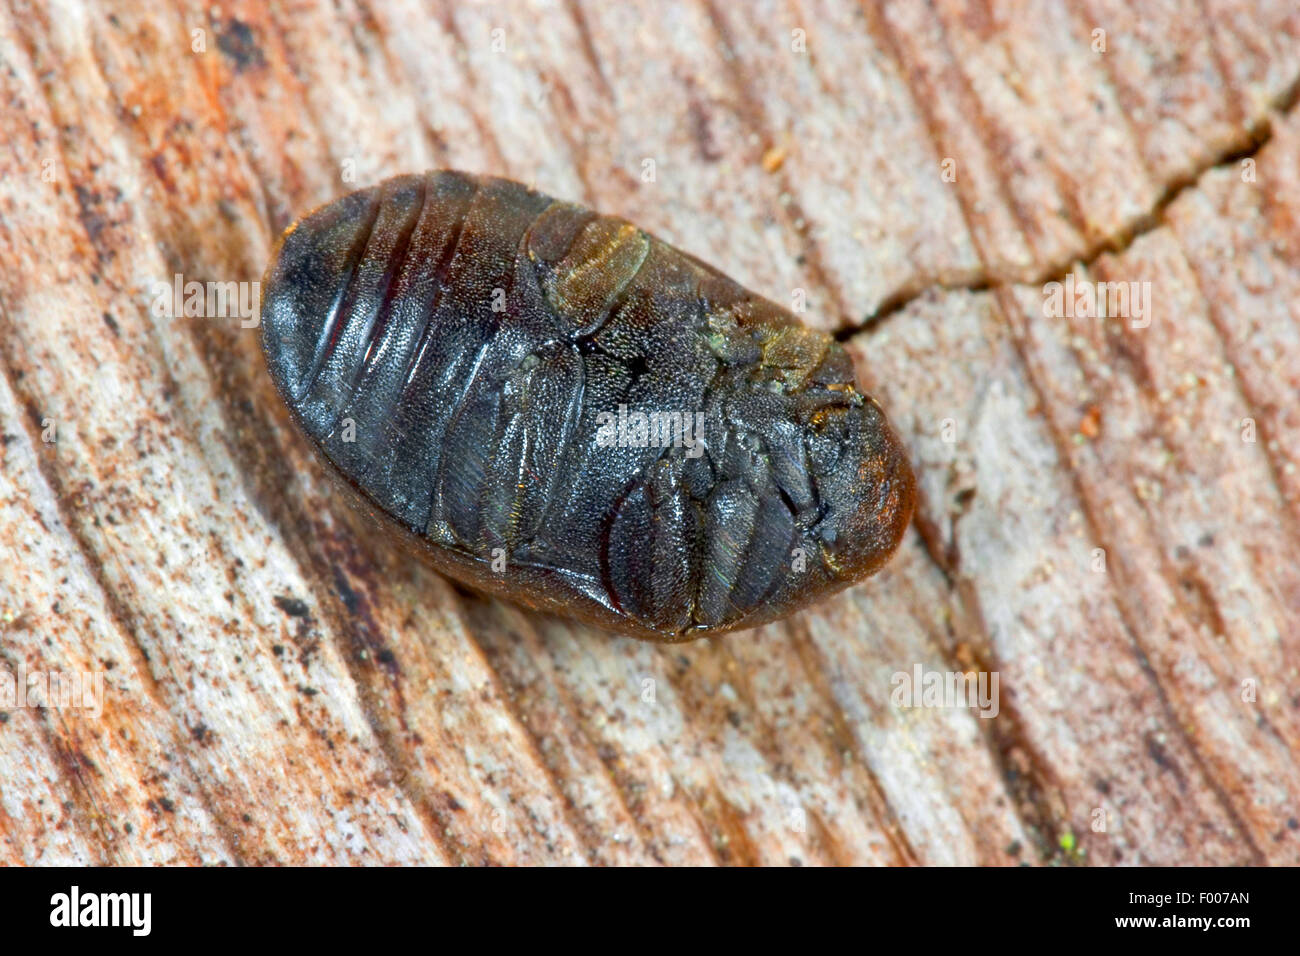 Pill beetle (Byrrhus pilula), thanatosis, Germany Stock Photo